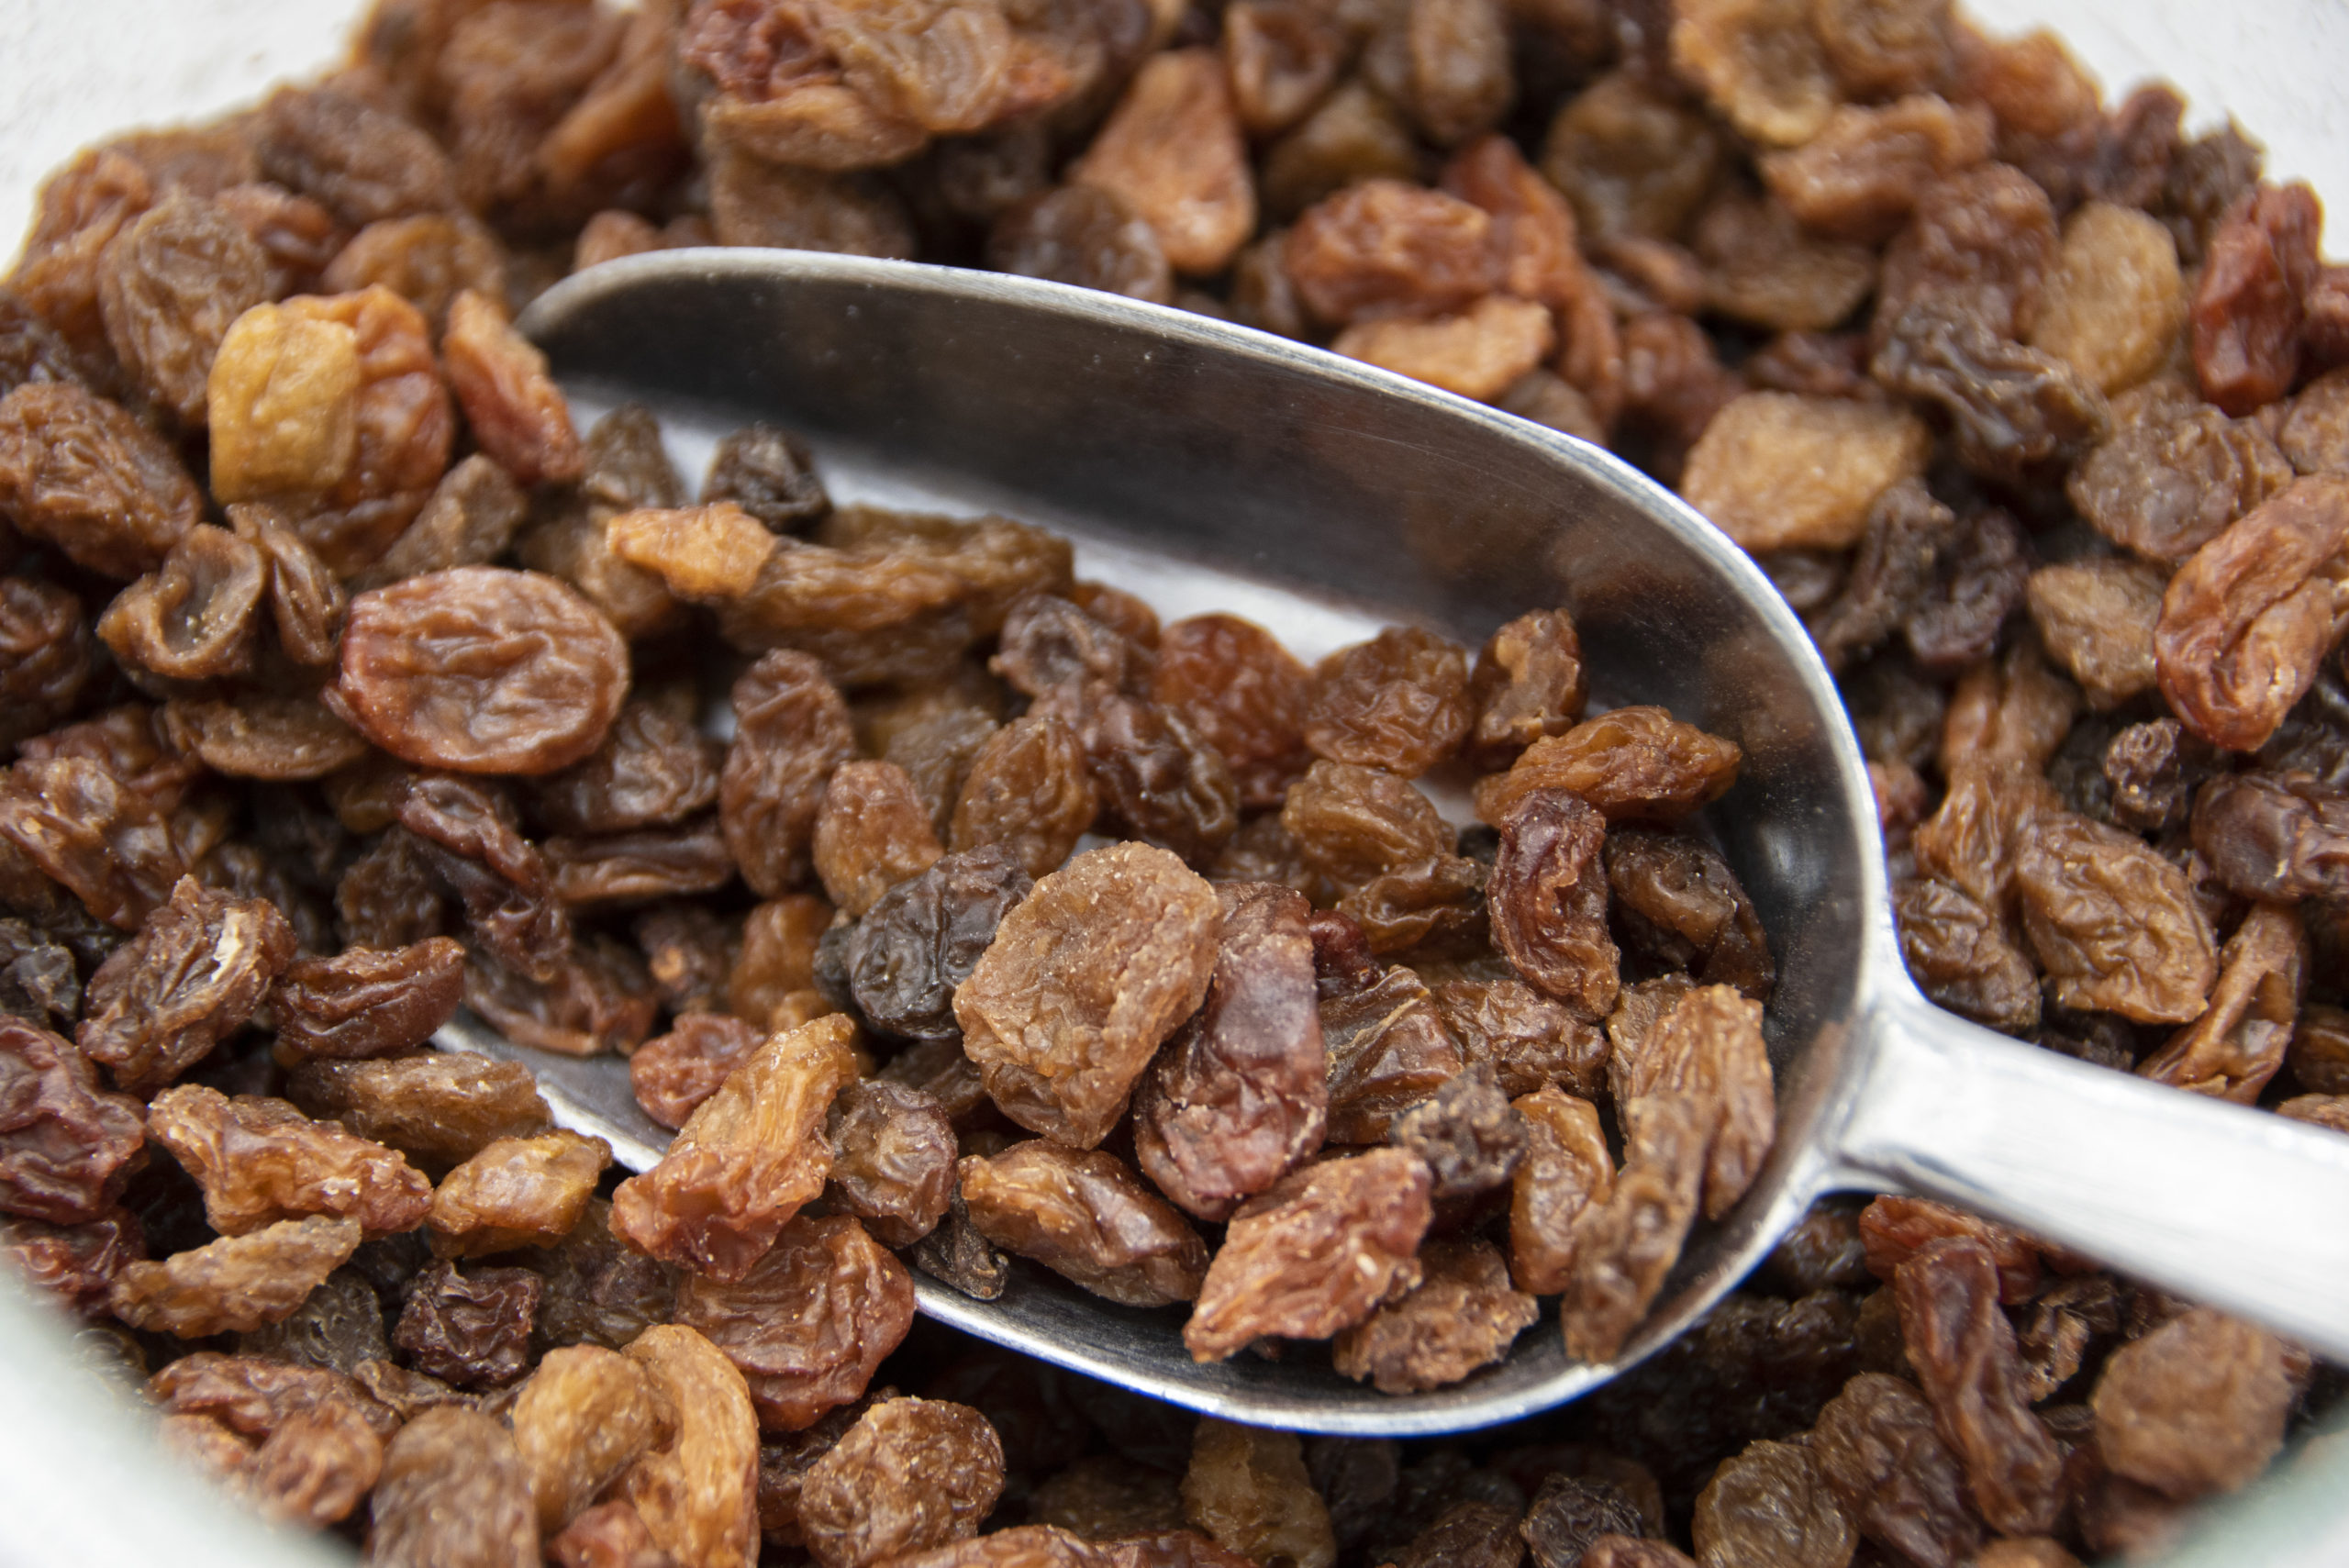 Raisins secs sultanines BIO en vrac